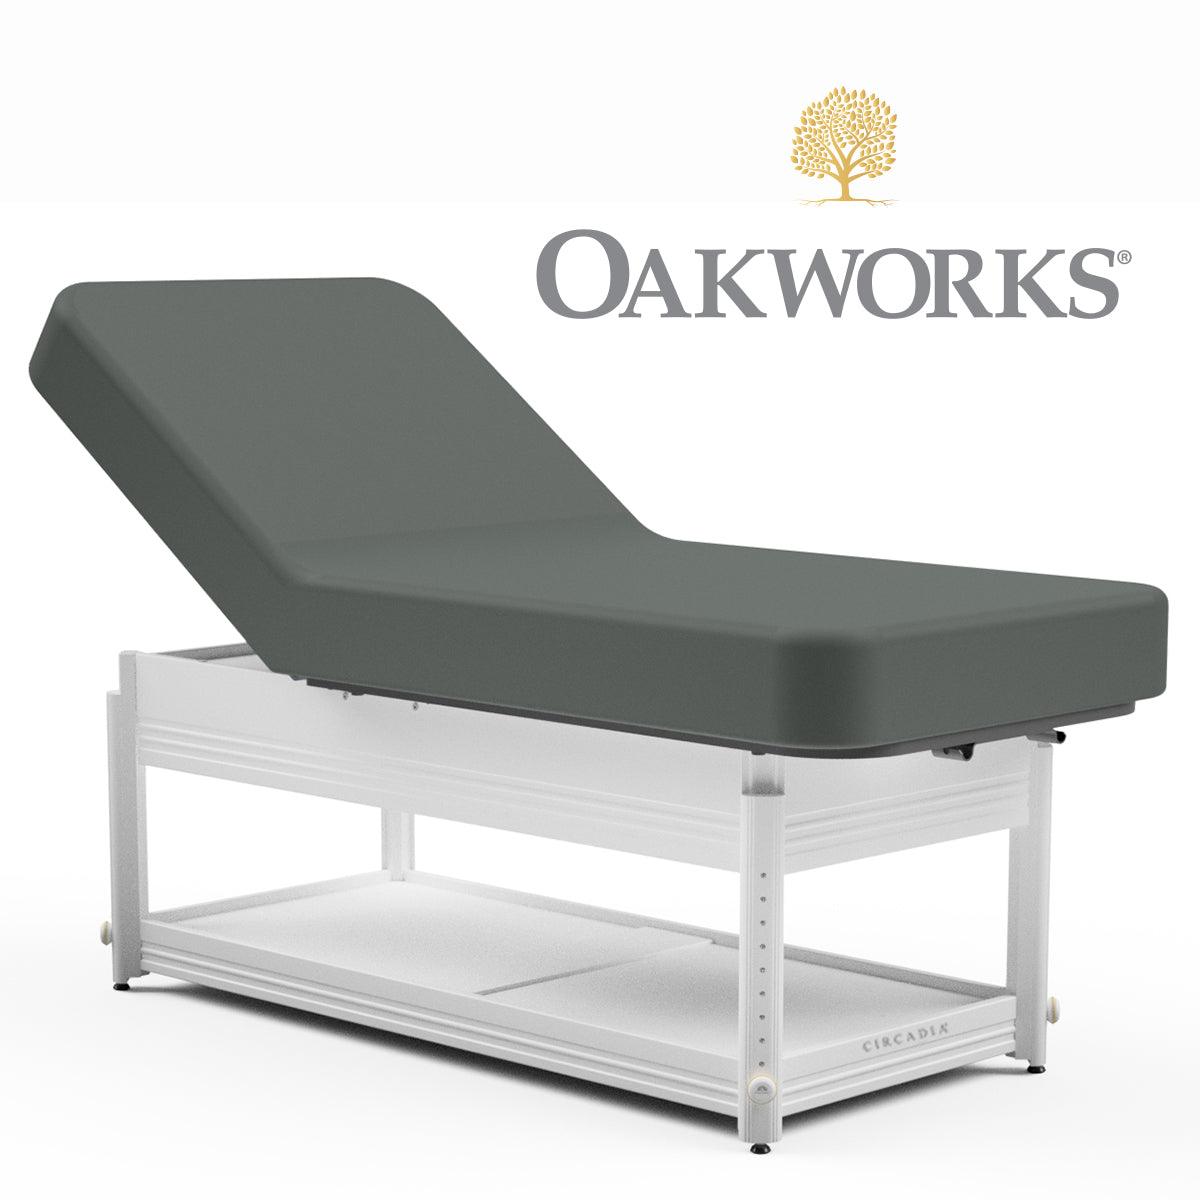 Circadia Branded Oakworks Treatment Table - CIRCADIA